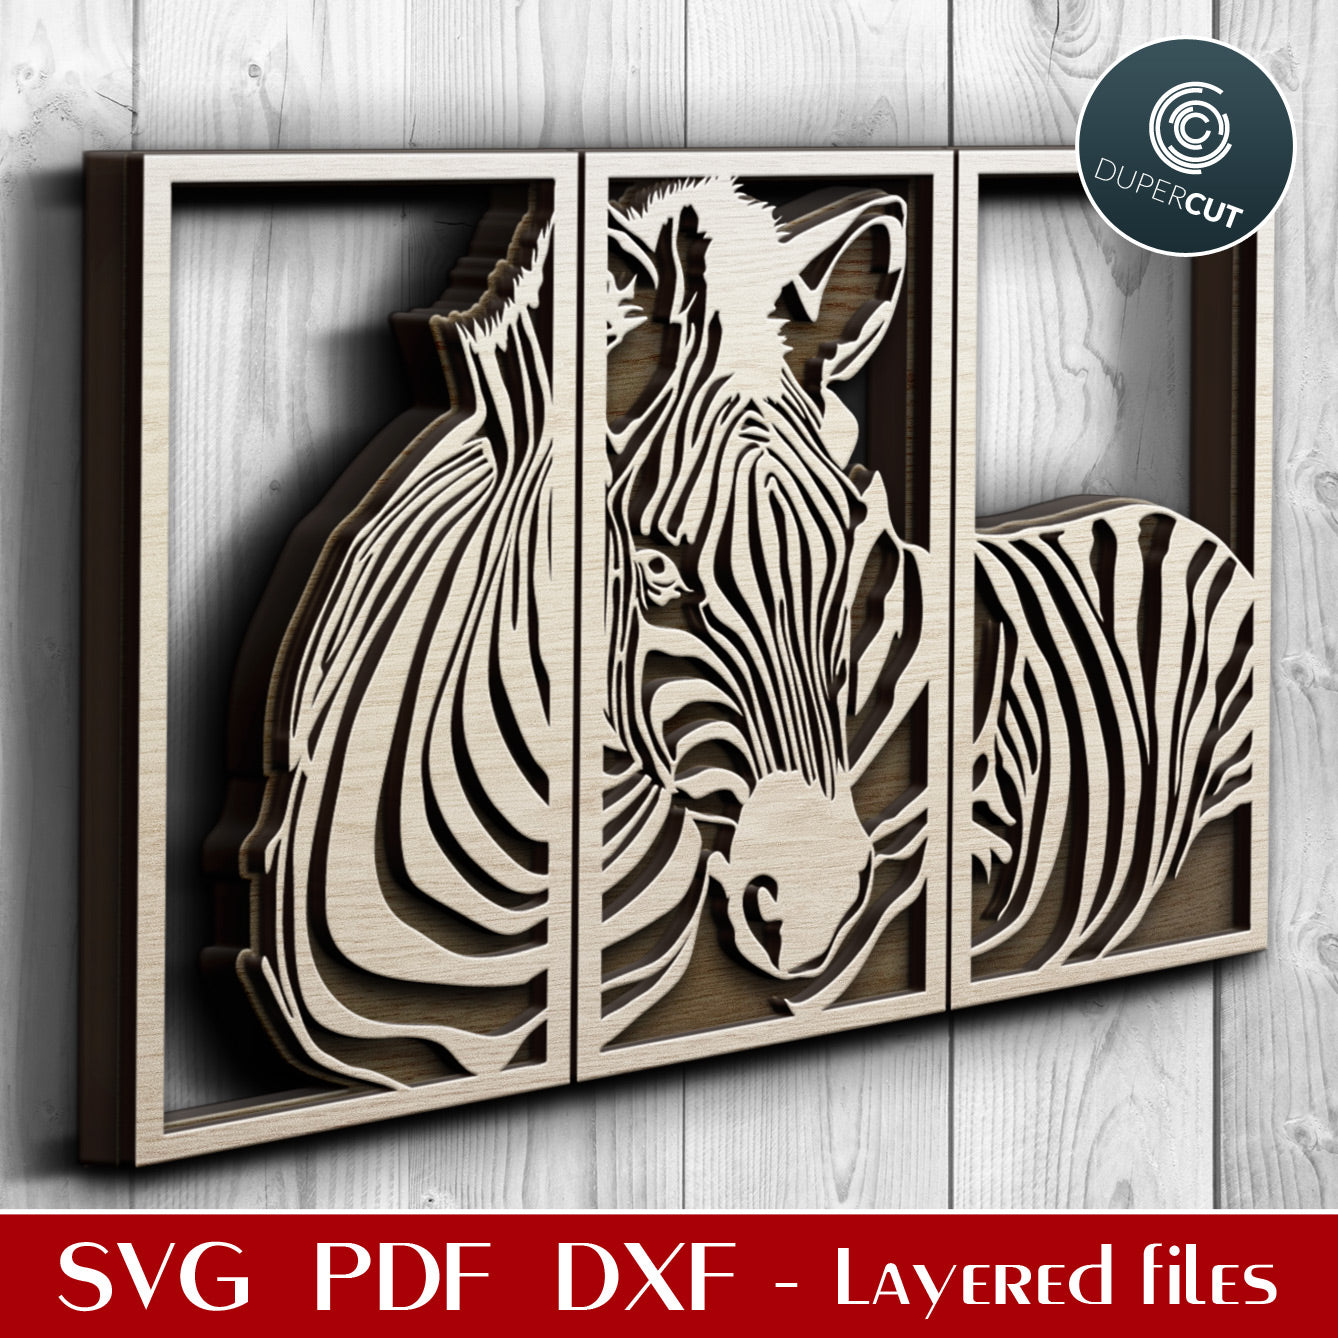 Multi panel zebra design - SVG PDF DXF layered files for laser cutting with Glowforge, Cricut, Silhouette Cameo, CNC plasma machines